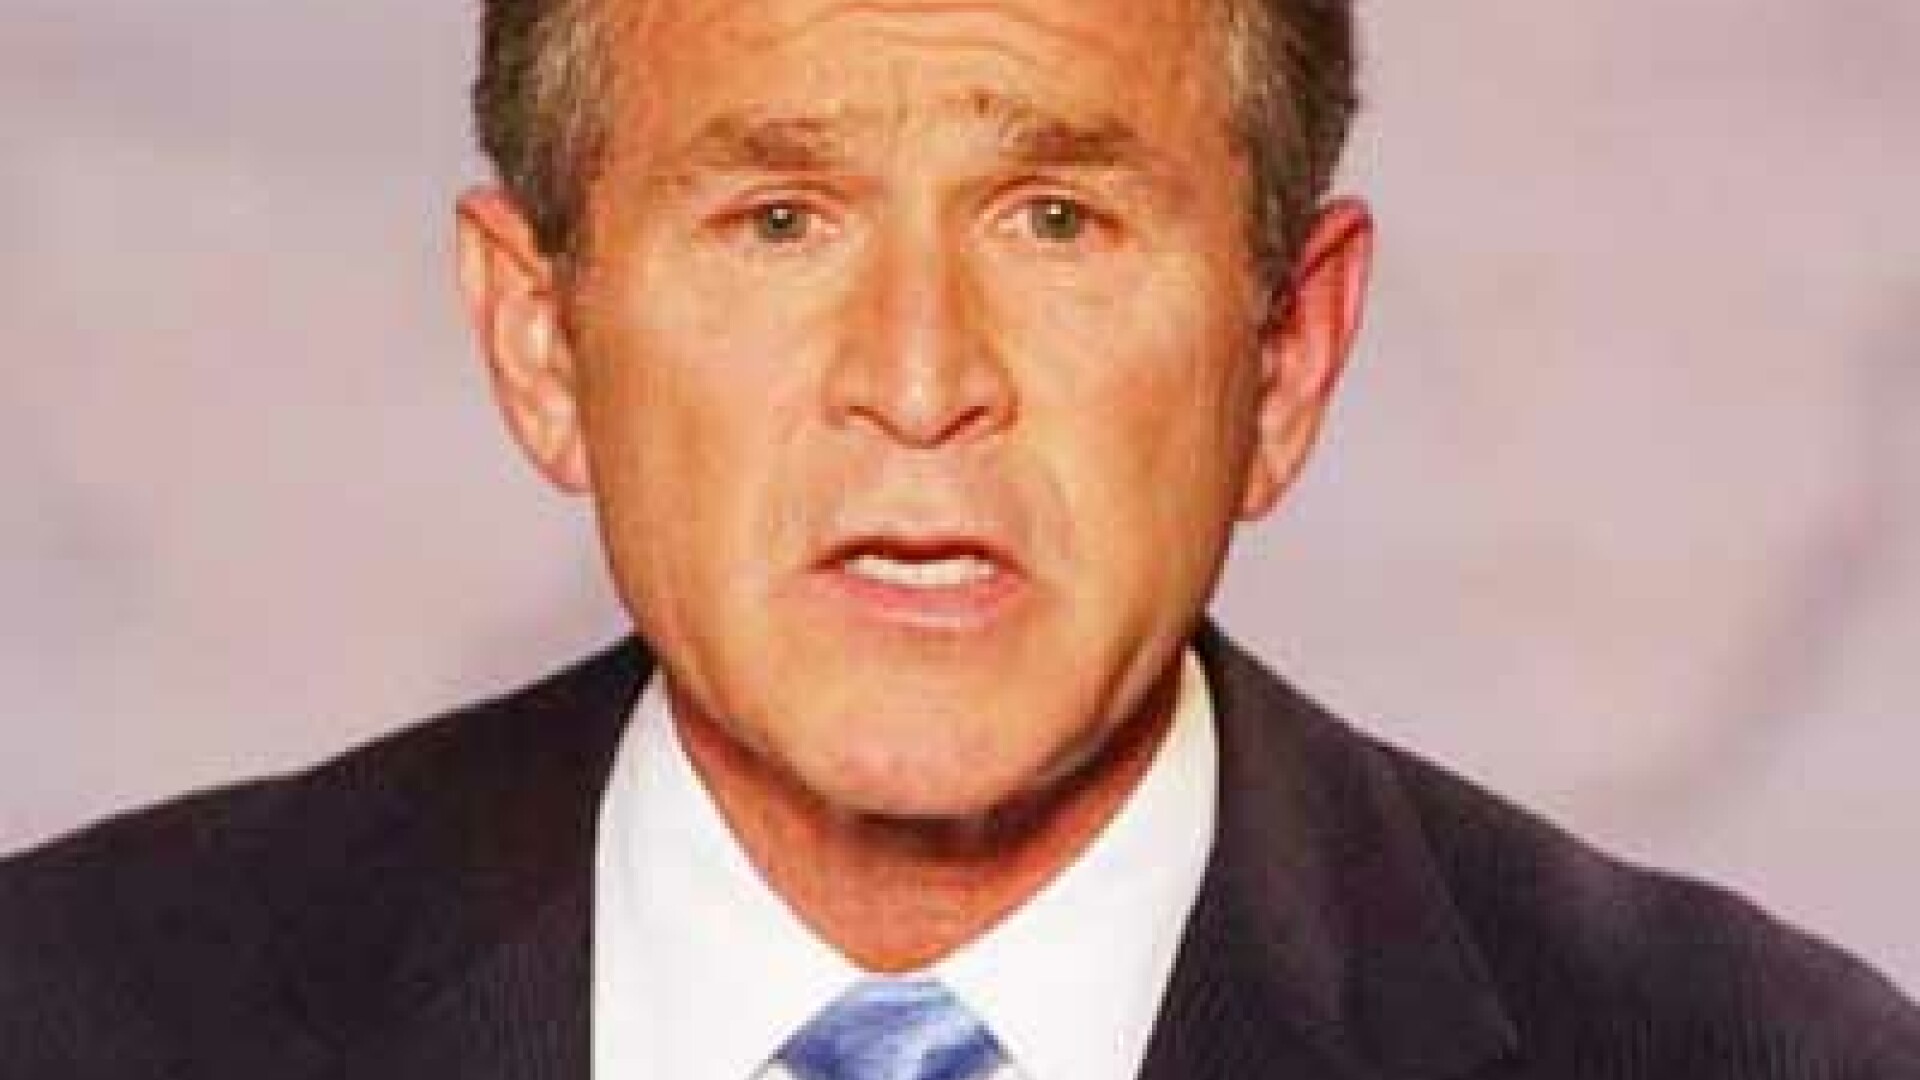 Administratia Bush, considerata responsabila pentru criza economica